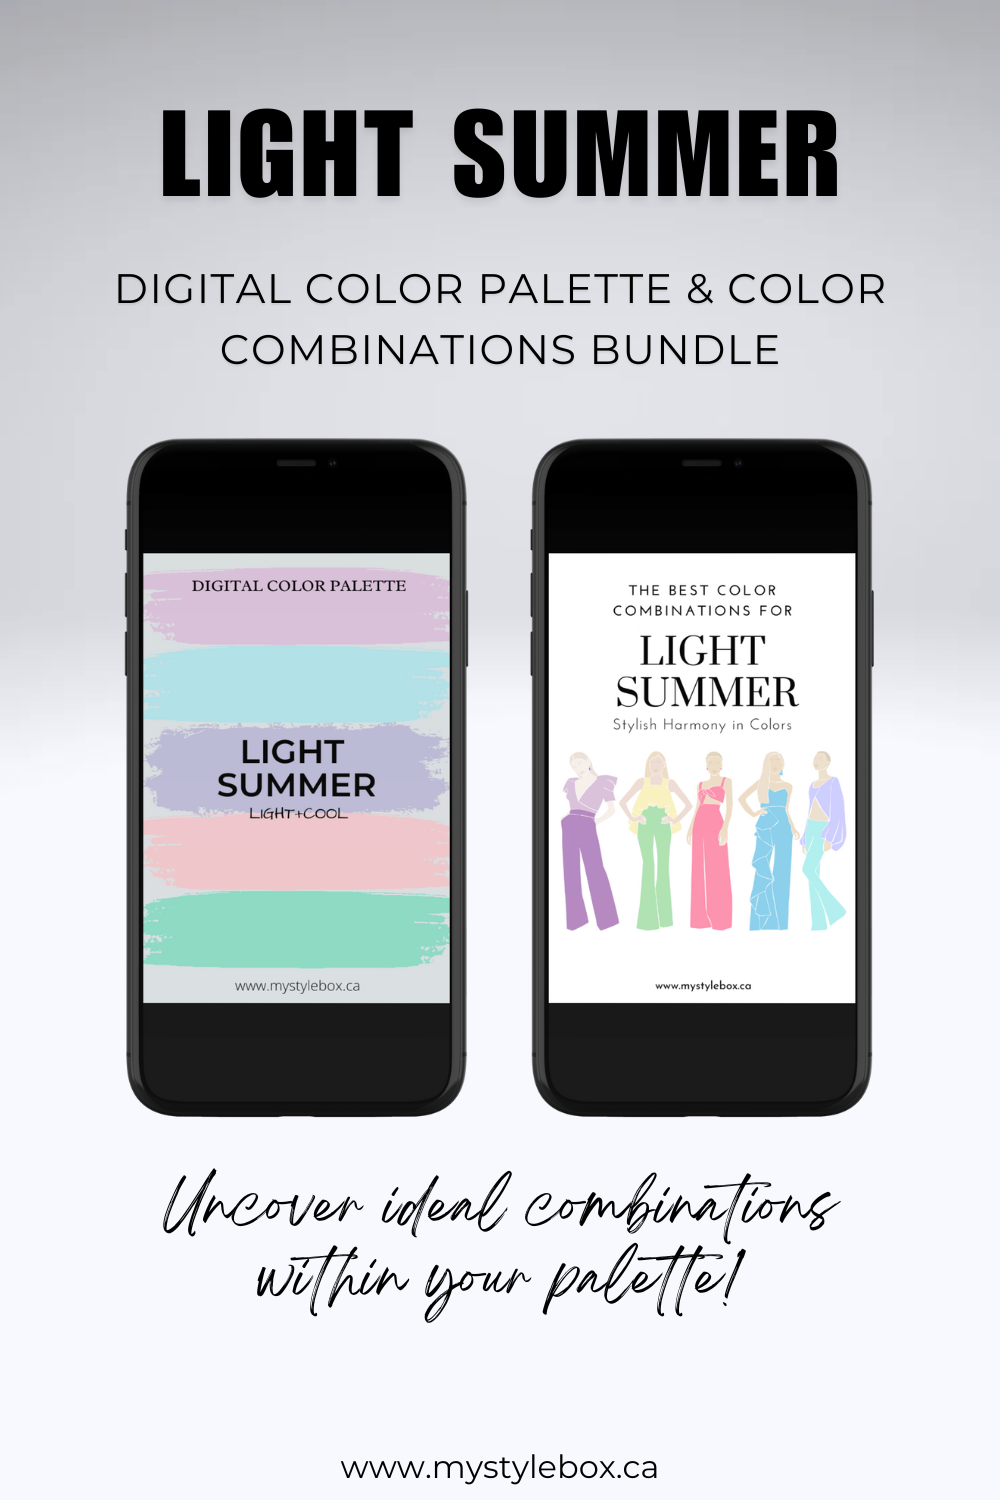 Light Summer Season Digital Color Palette and Color Combinations